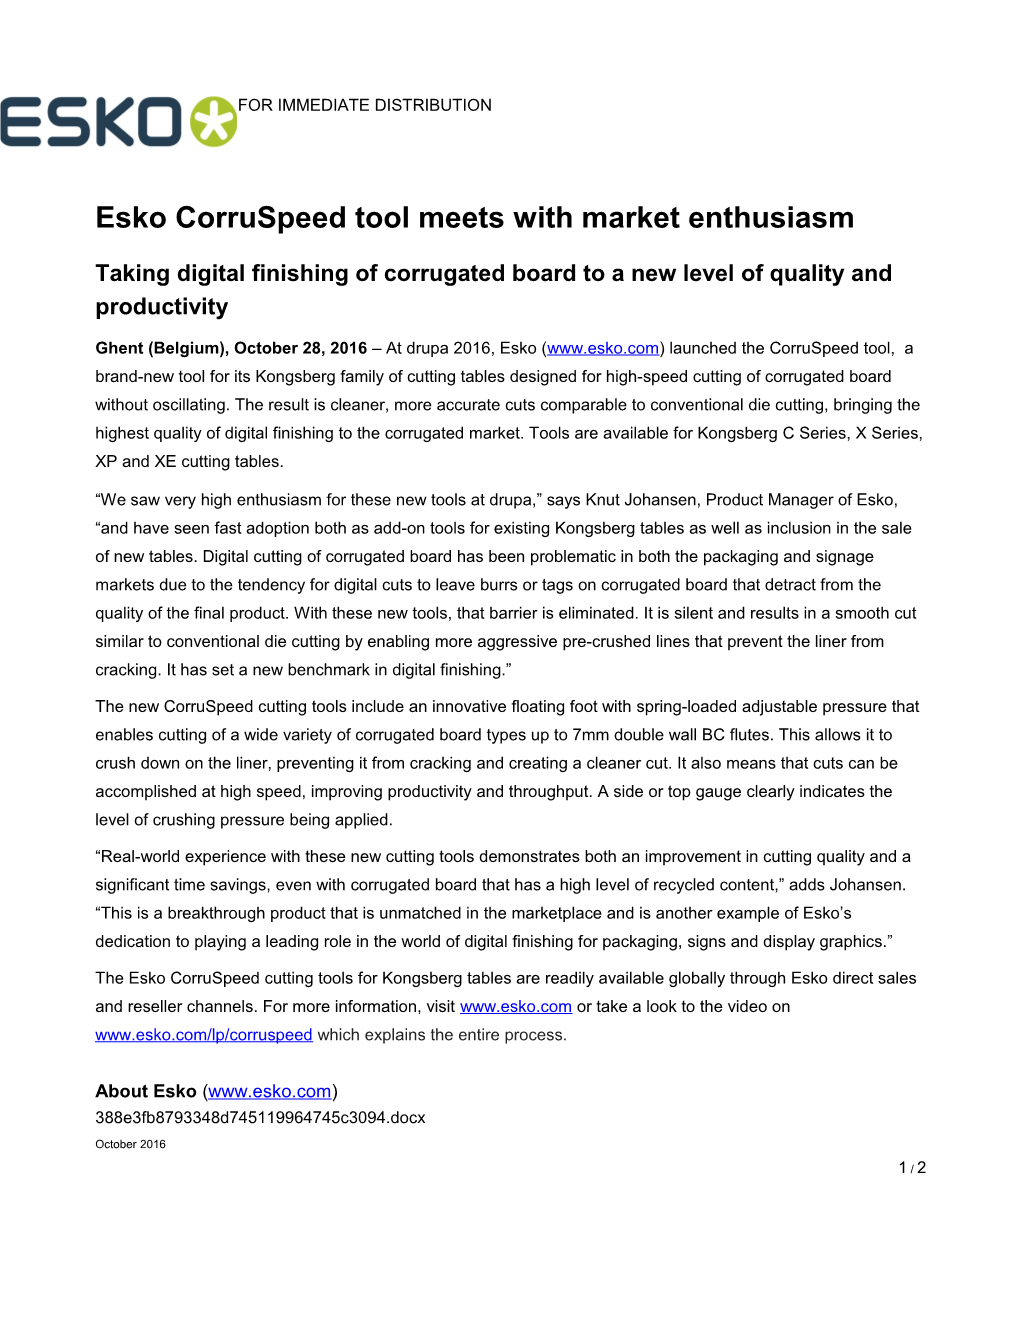 Esko Corruspeed Tool Meets with Market Enthusiasm